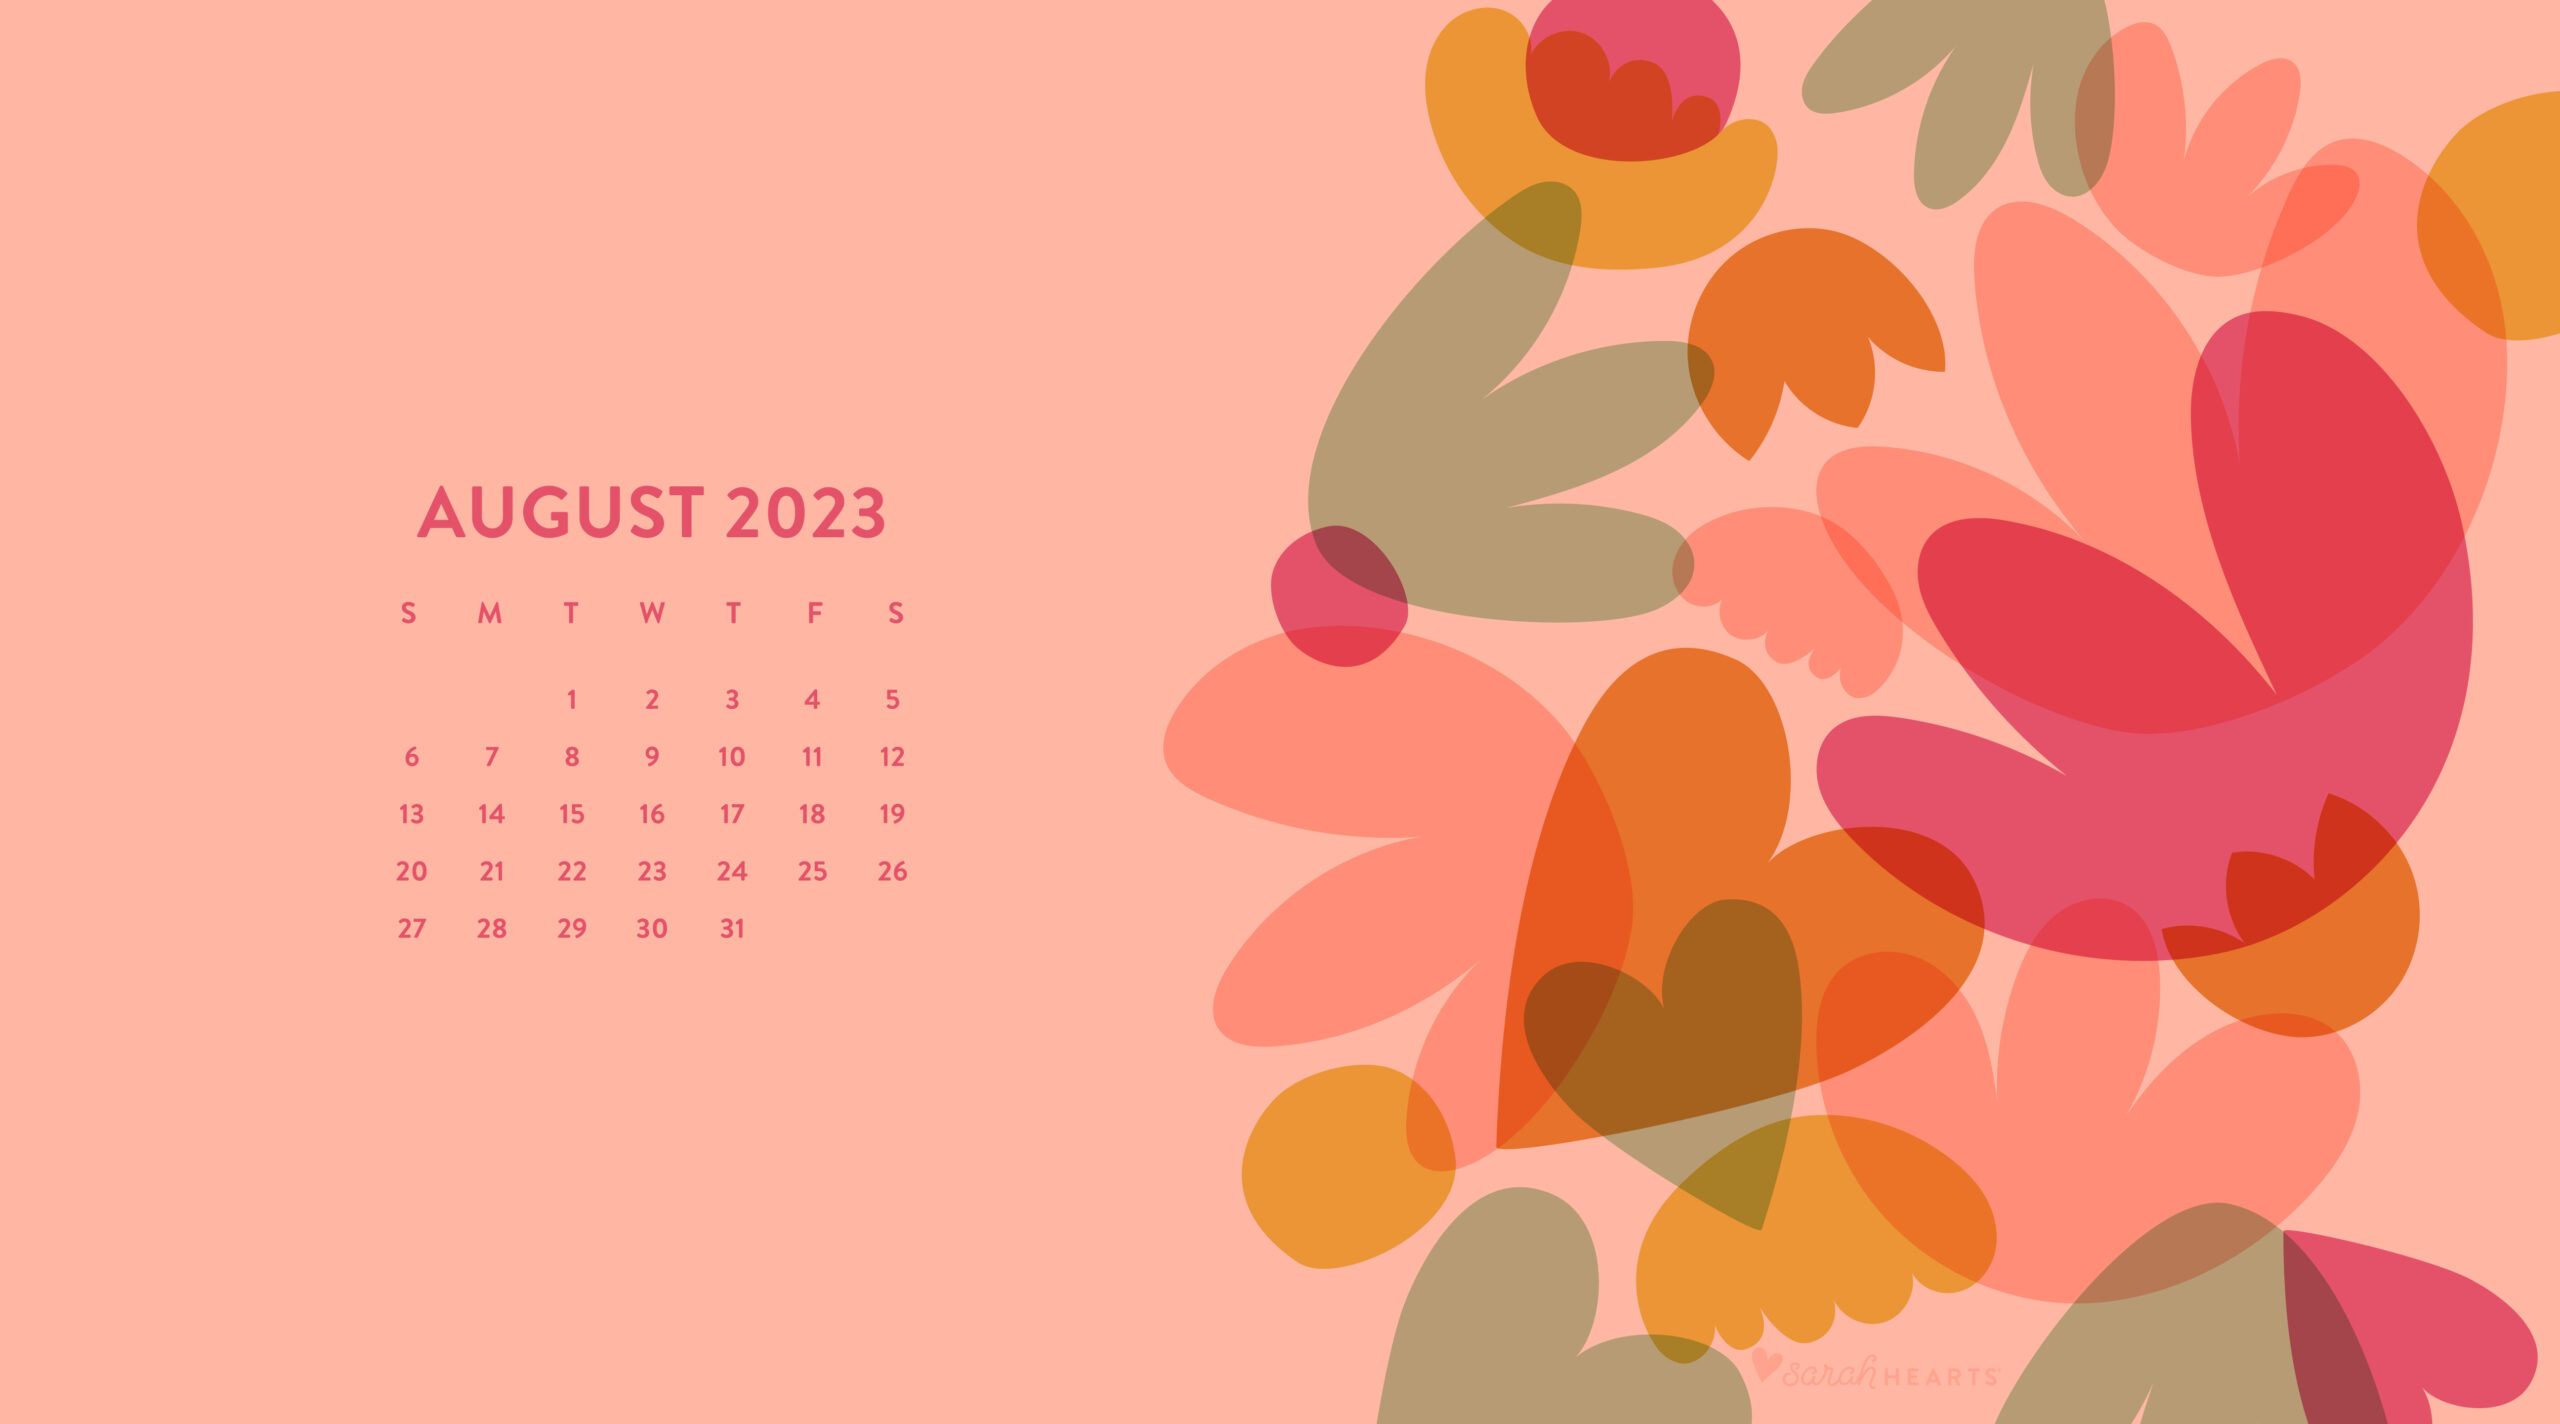 August 2023 Desktop Wallpaper Calendar  WordsJustforYoucom  Original  Creative Animated GIFs